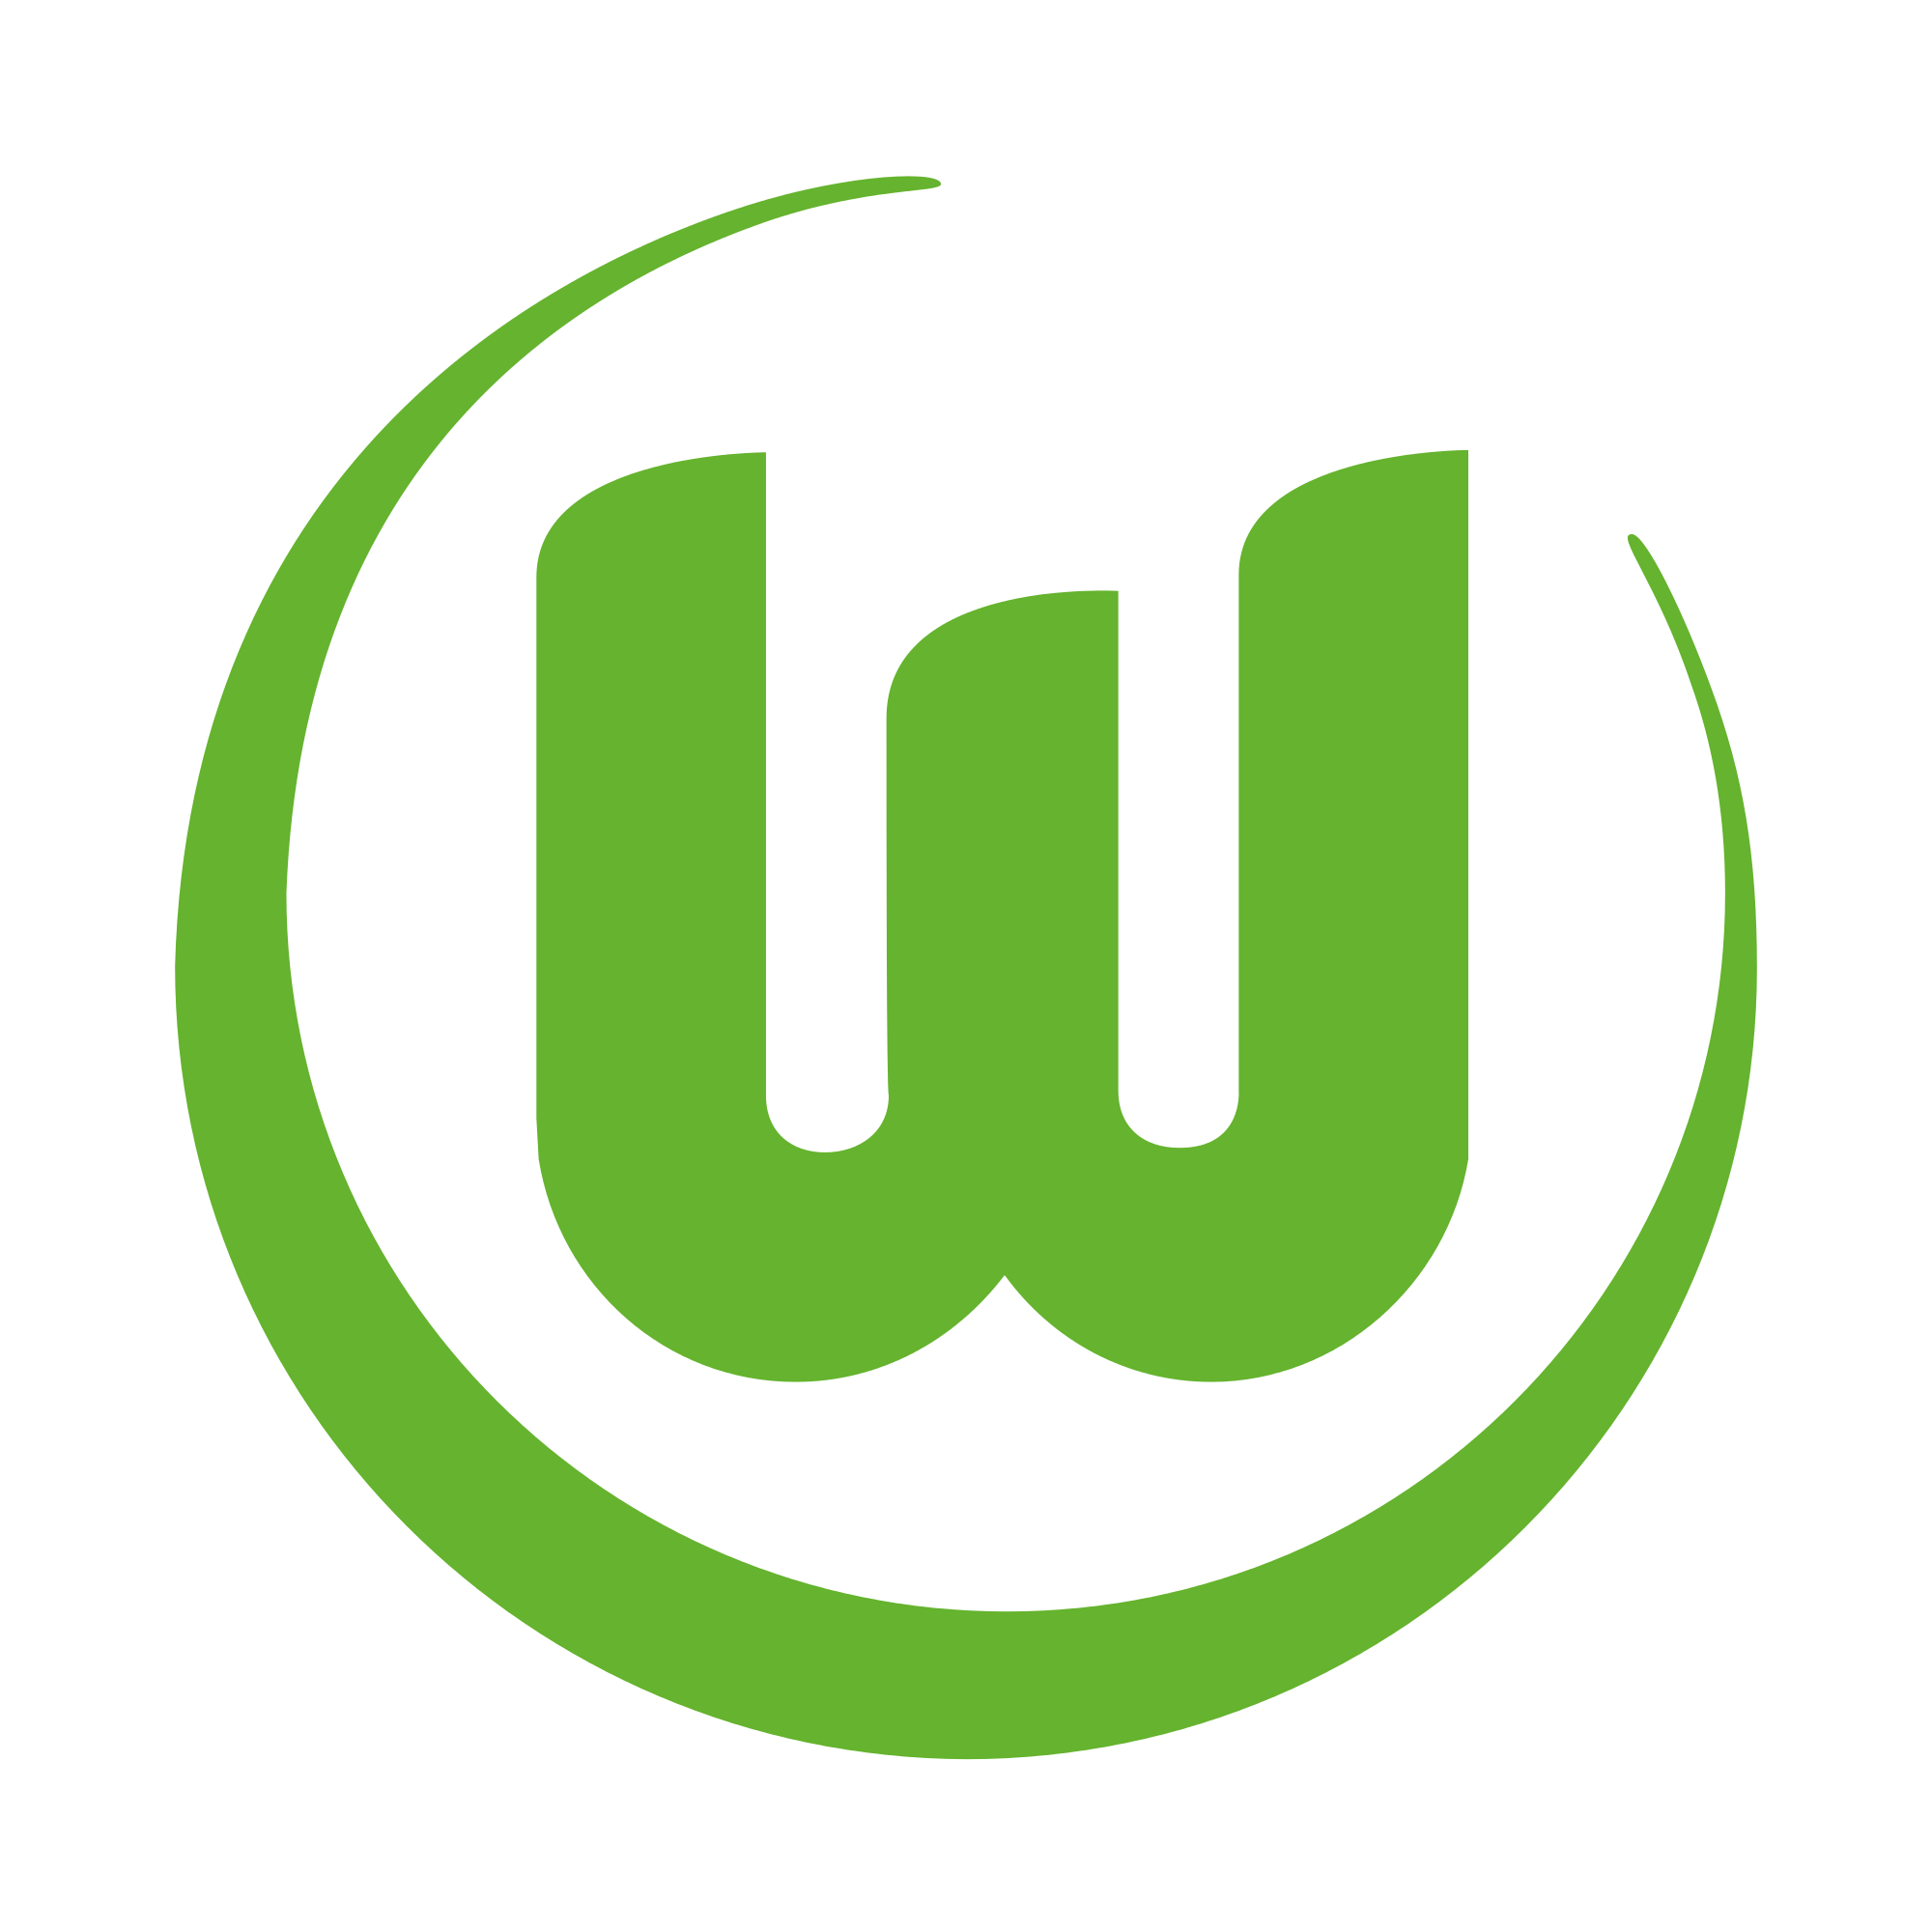 Green w Logo - File:Logo-VfL-Wolfsburg.svg - Wikimedia Commons